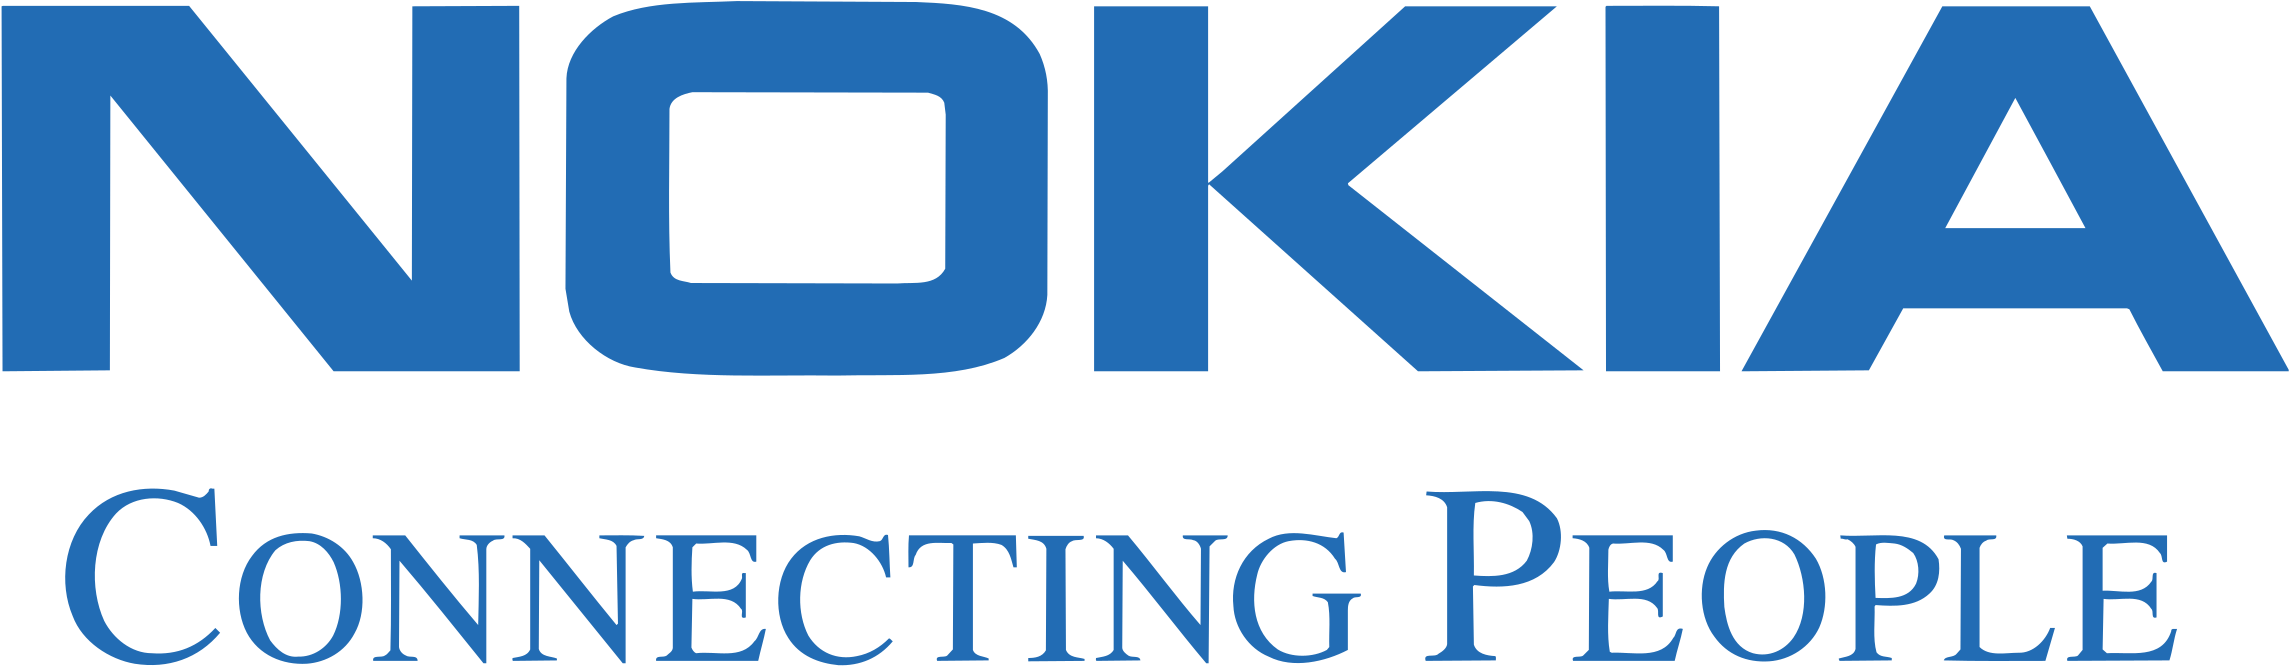 Nokia Logo Png Transparent - Nokia Connecting People Logo (2400x2400), Png Download